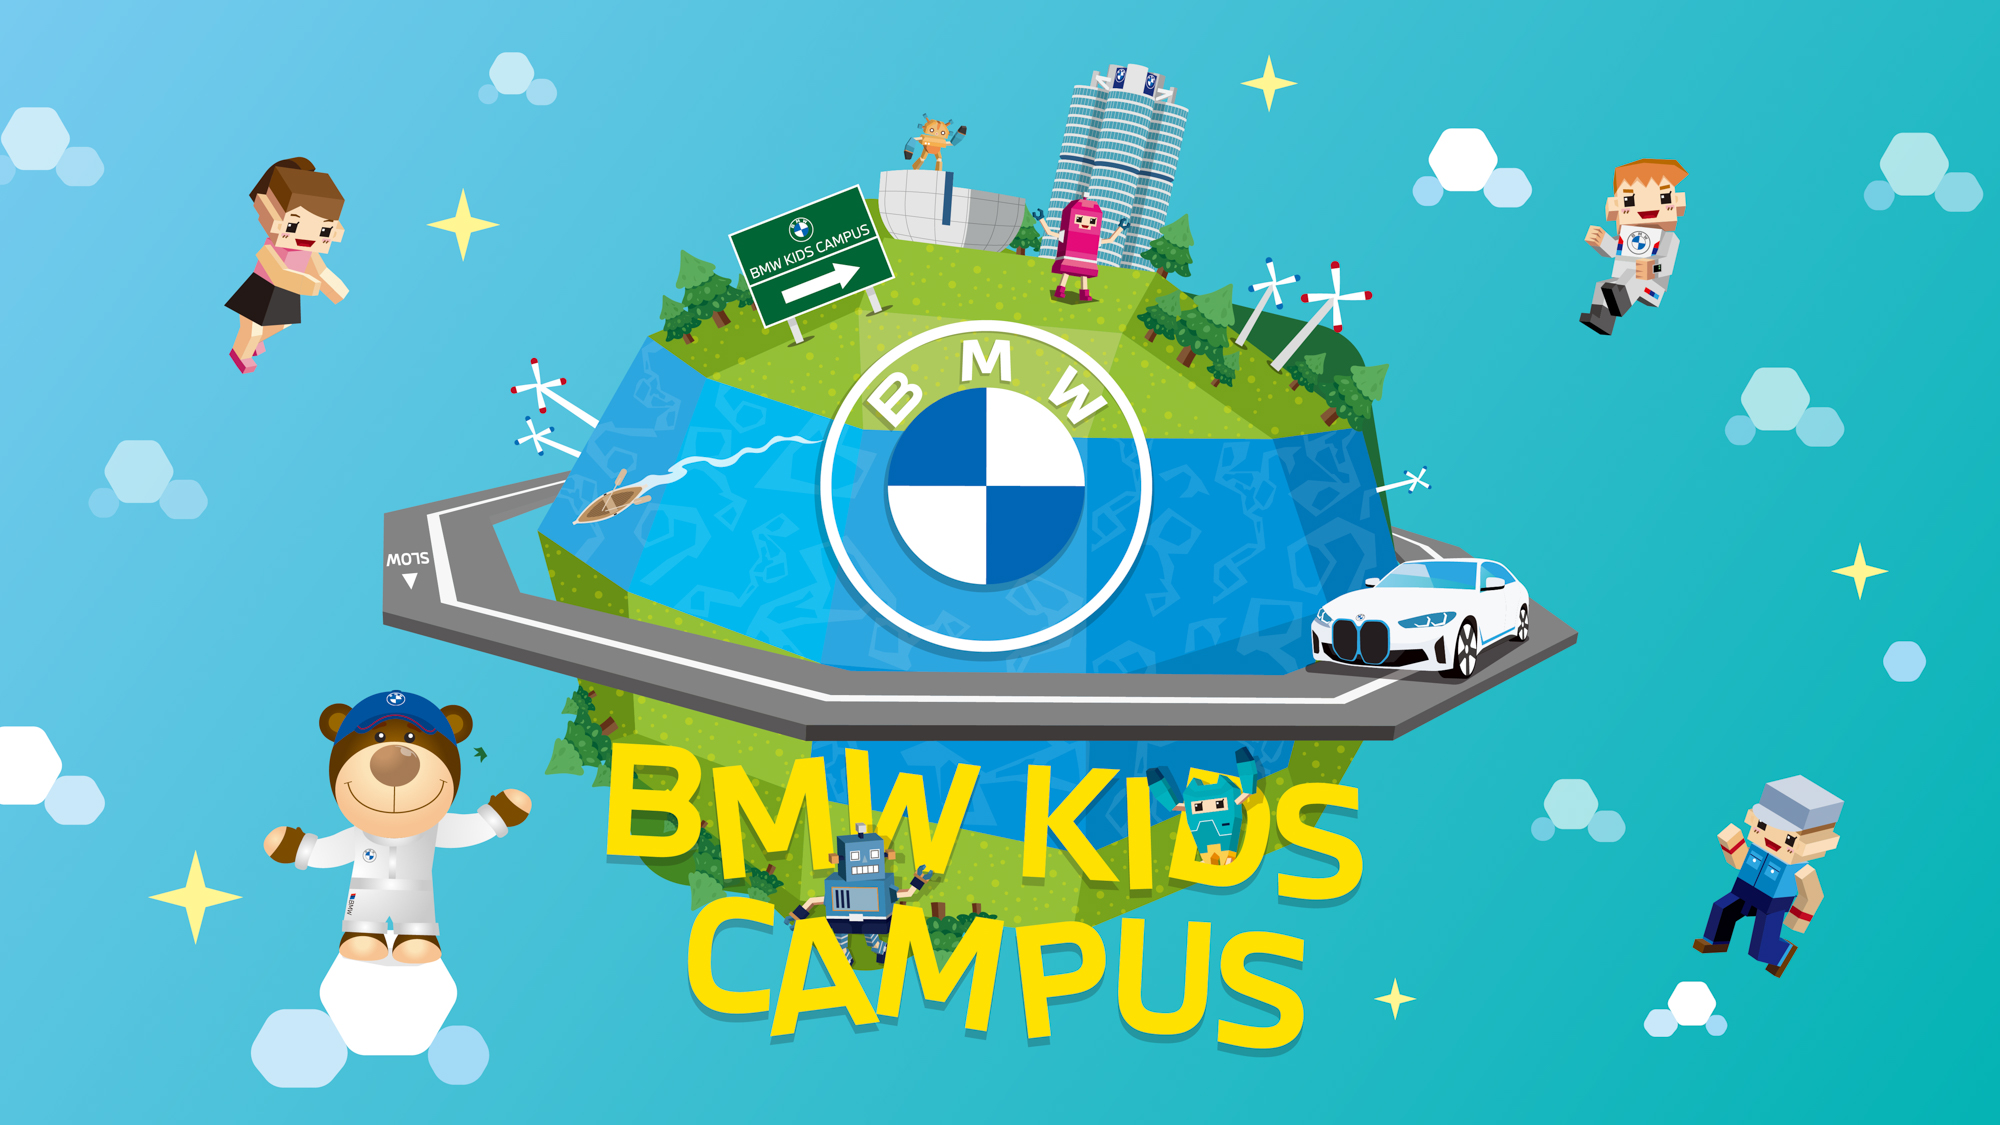 2022 BMW Kids Campus 7 月 25 日線上報名開跑